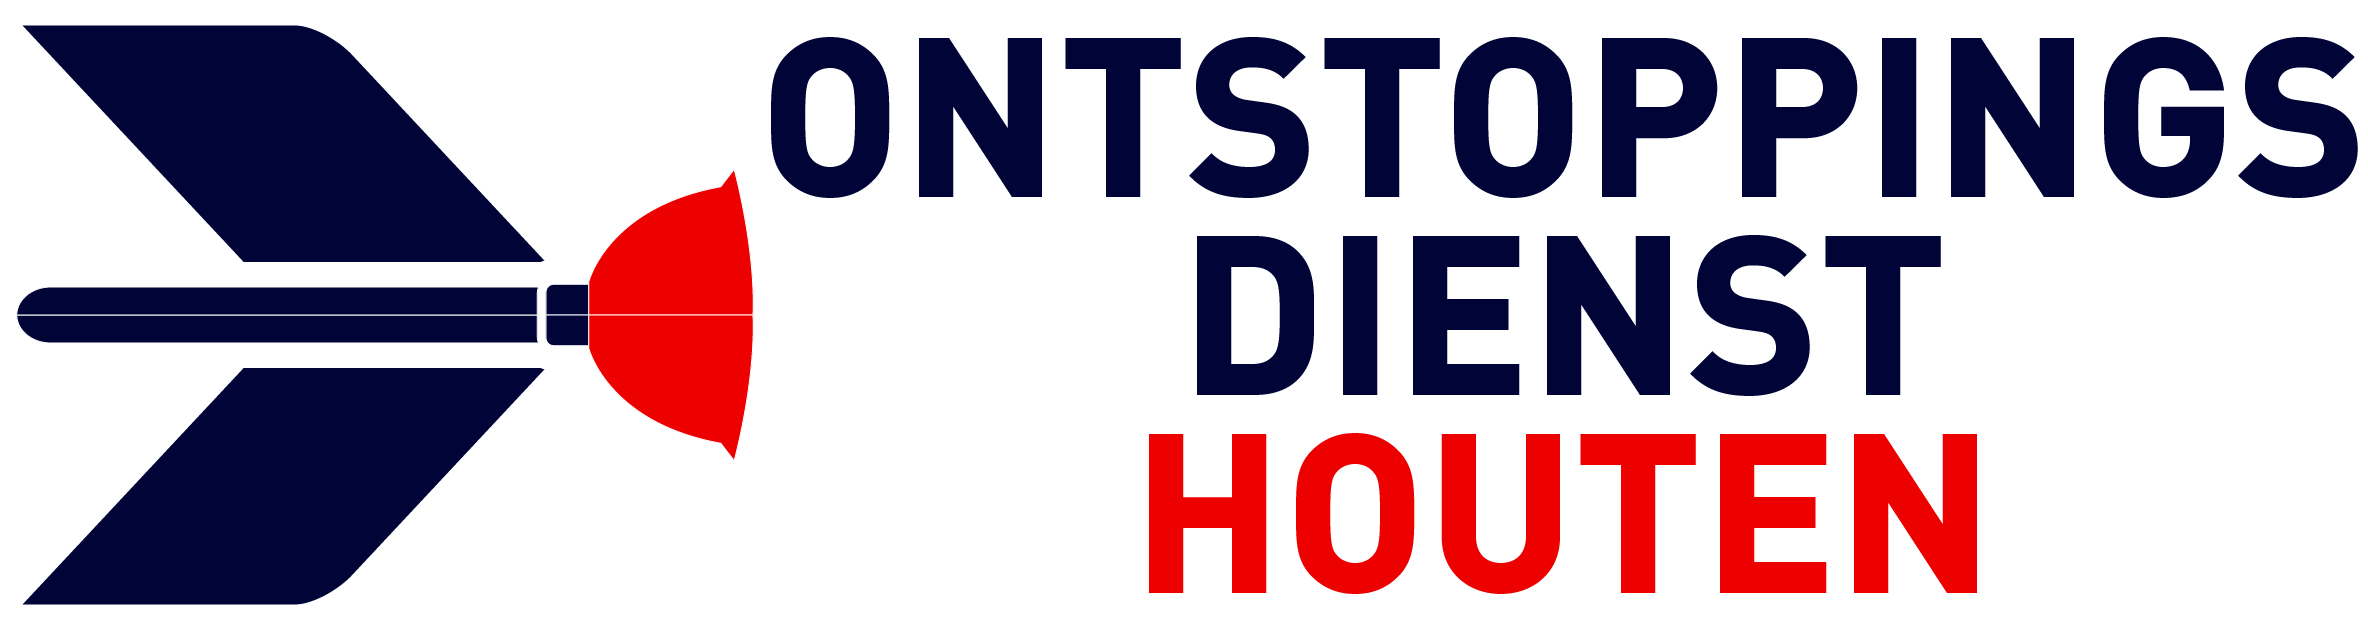 Ontstoppingsdienst Houten logo